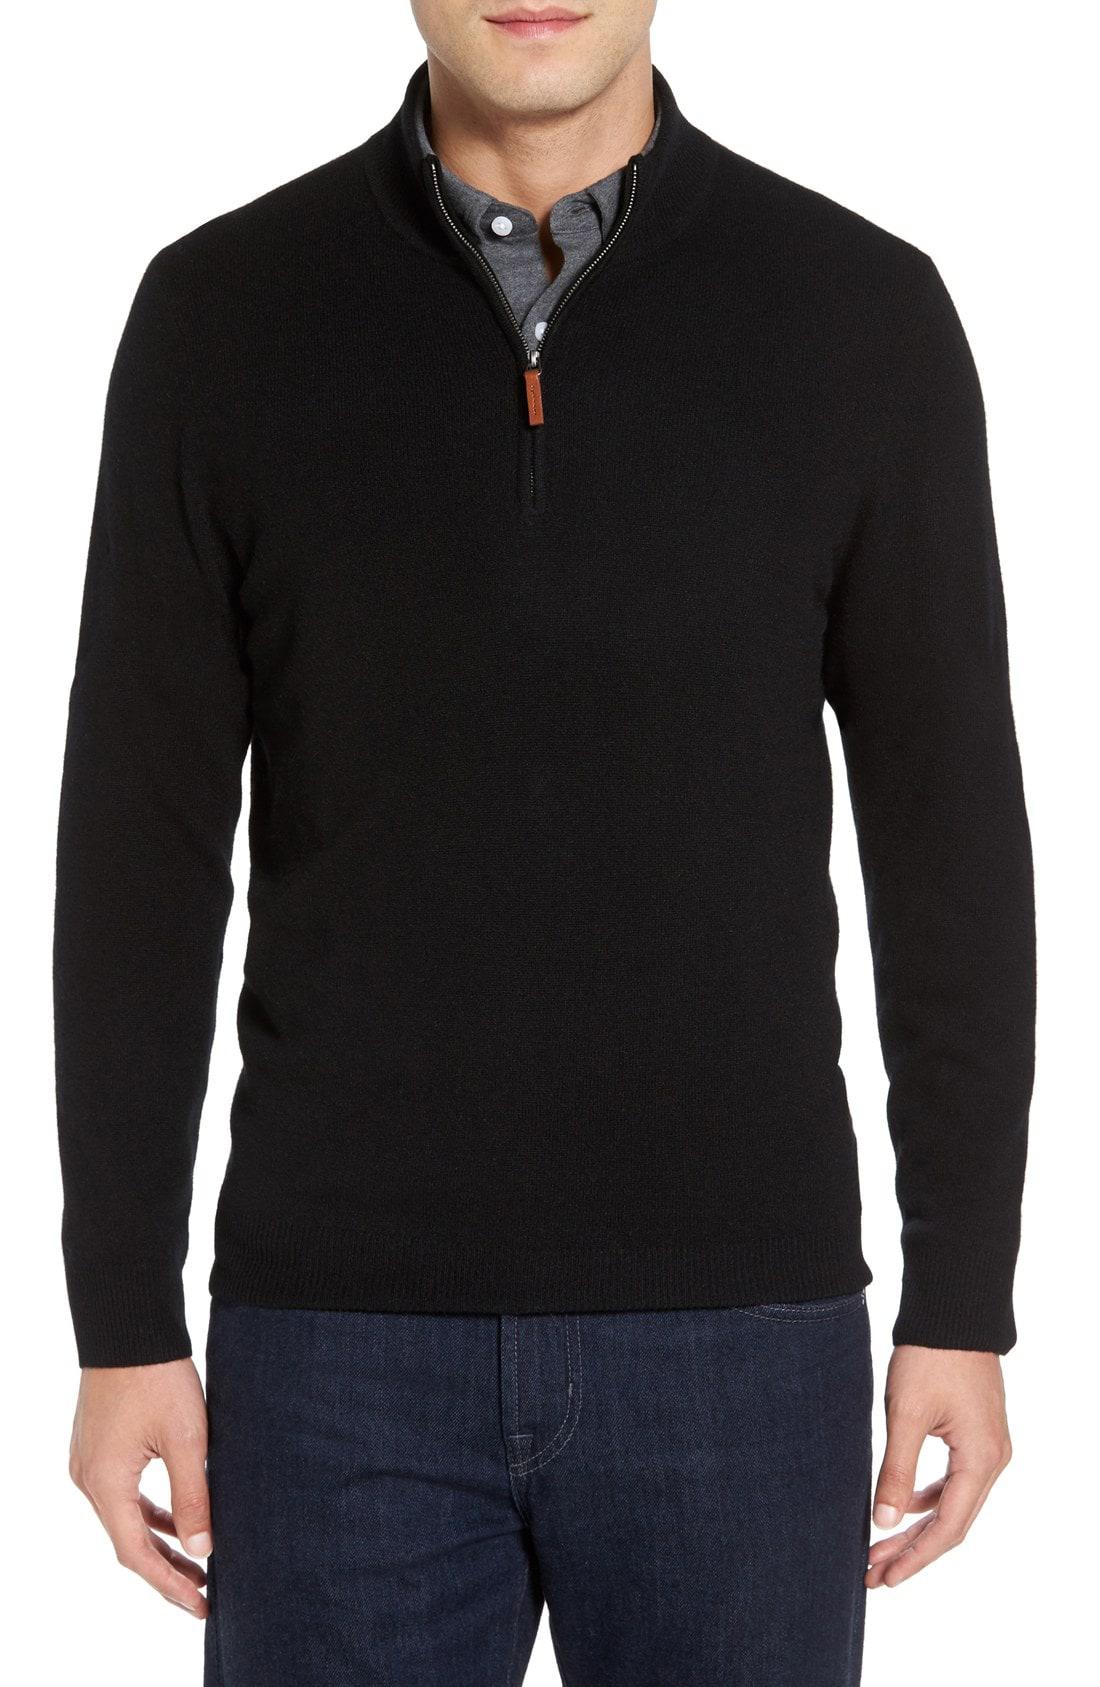 Lyst - Nordstrom Cashmere Quarter Zip Sweater in Black for Men